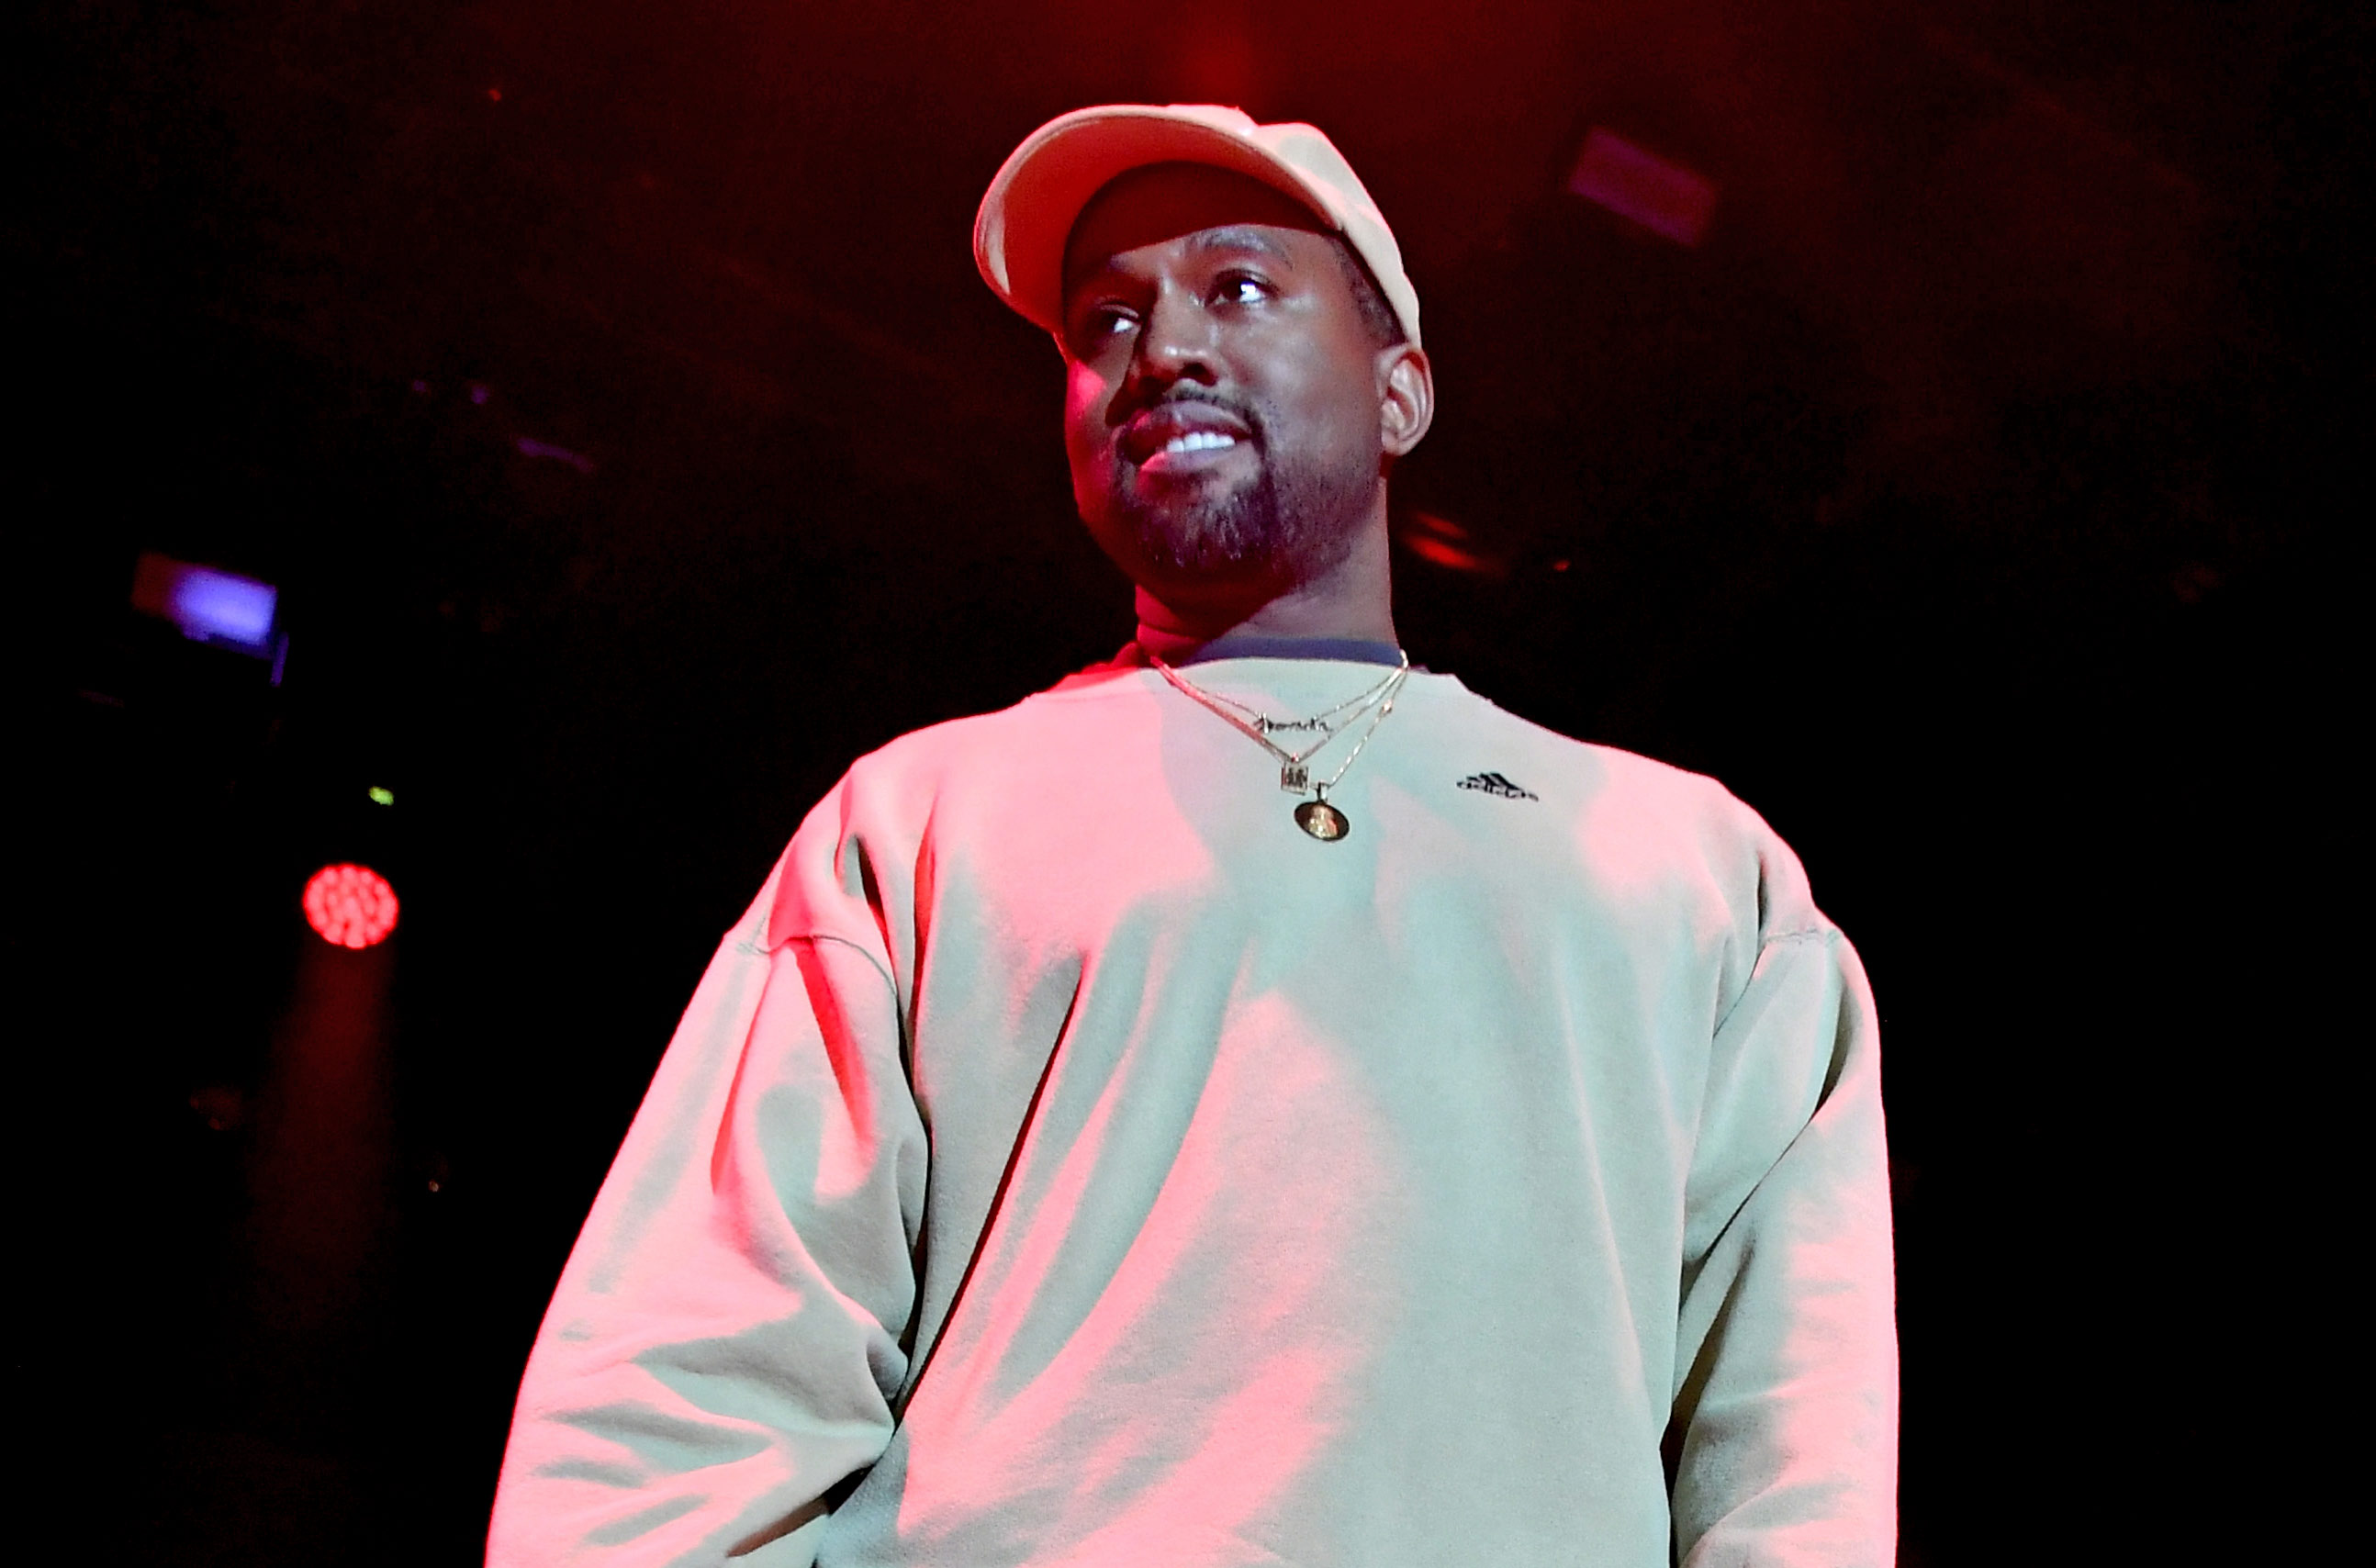 Louis Vuitton designer got his start with Kanye West